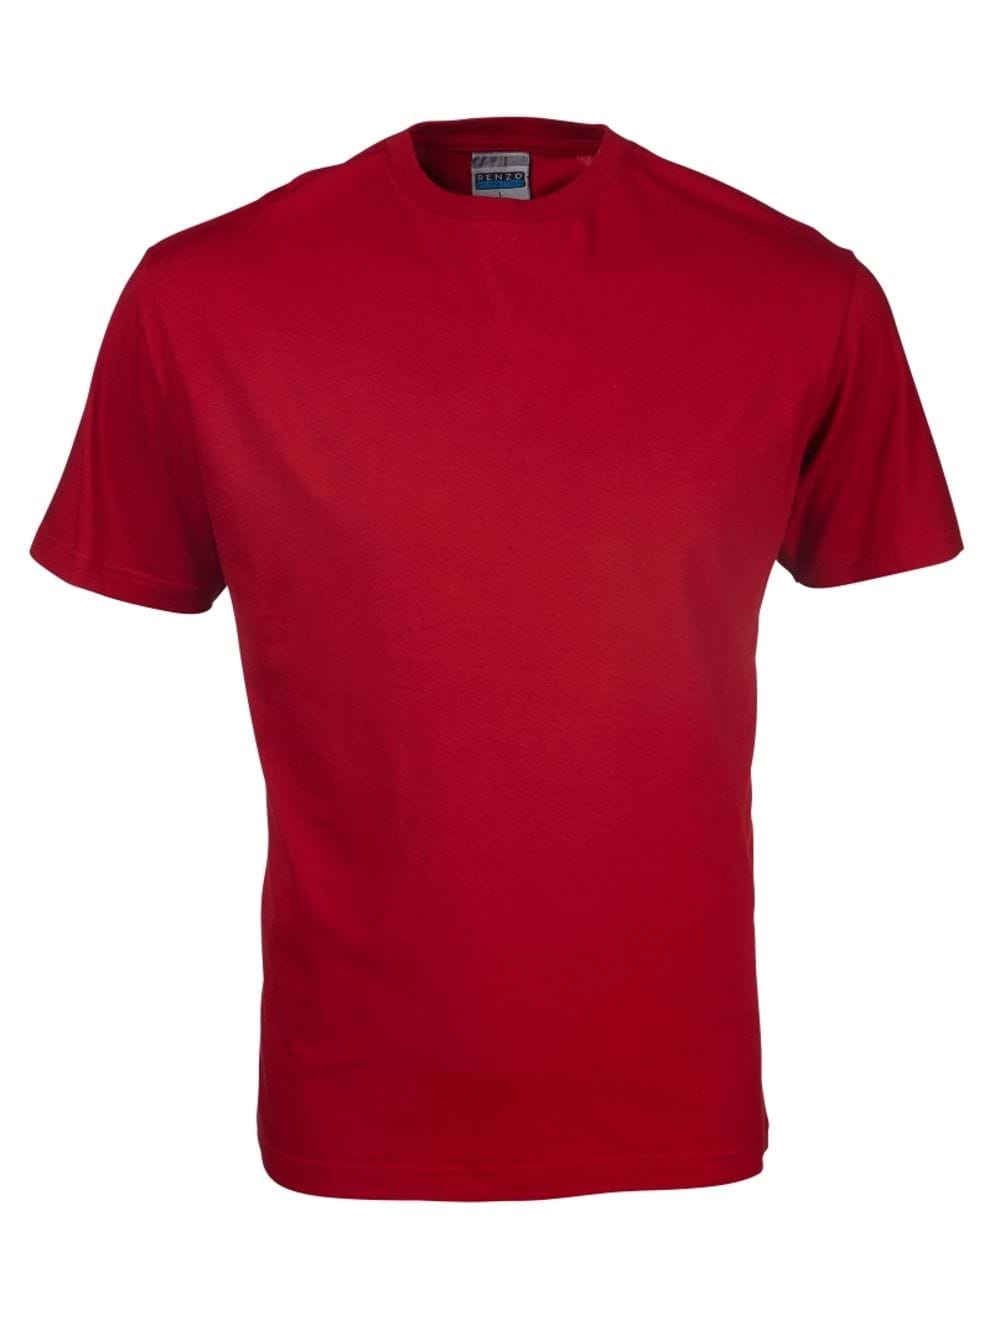 165G Crew Neck T-Shirt - Cerise Red / S